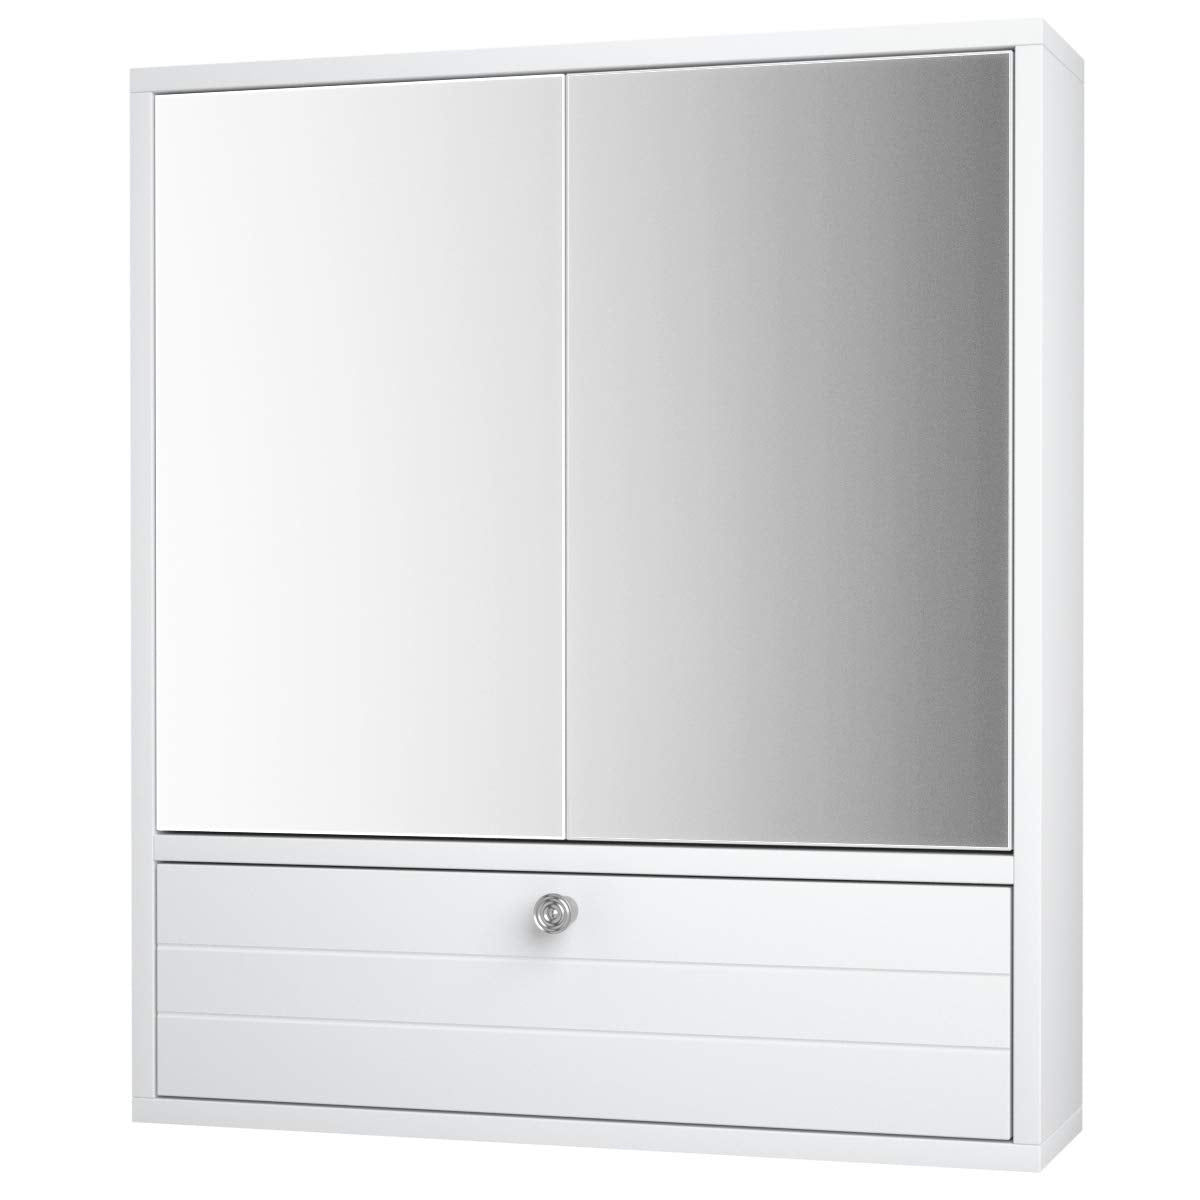 Giantex Bathroom Cabinet Wall Mounted Mirrored Storage Organizer